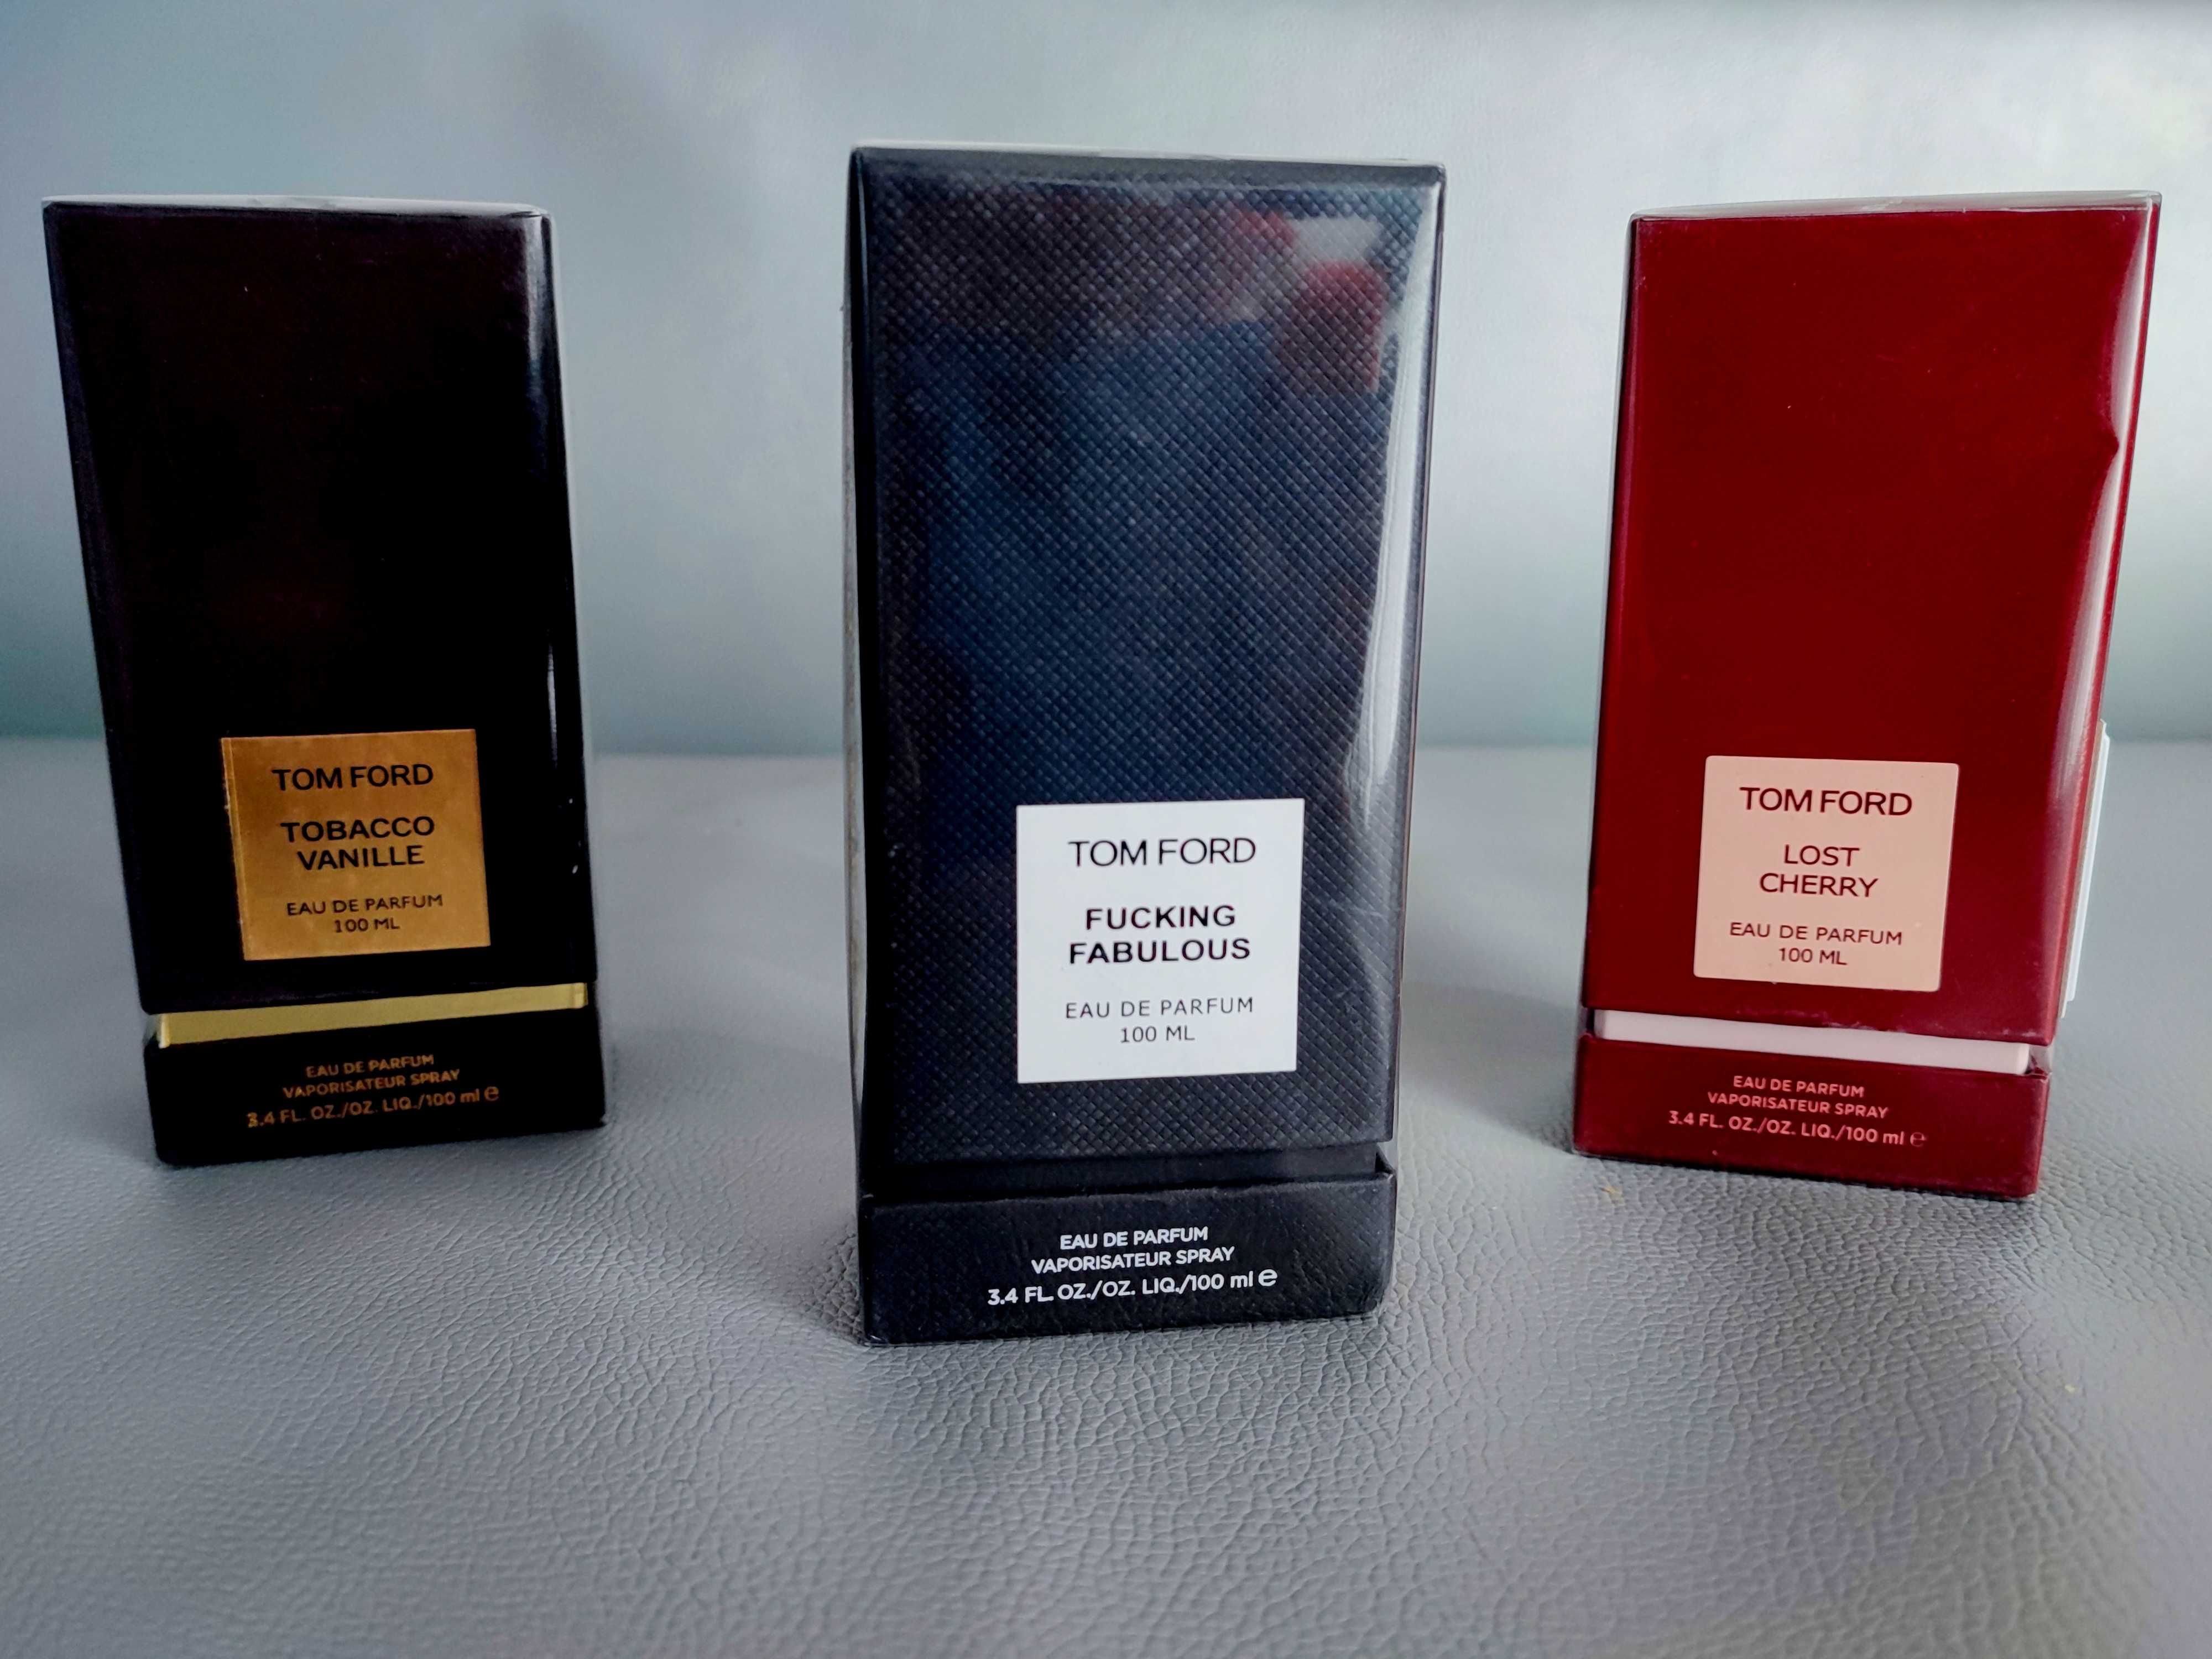 Parfum Tom Ford F Fabulos,100 ml